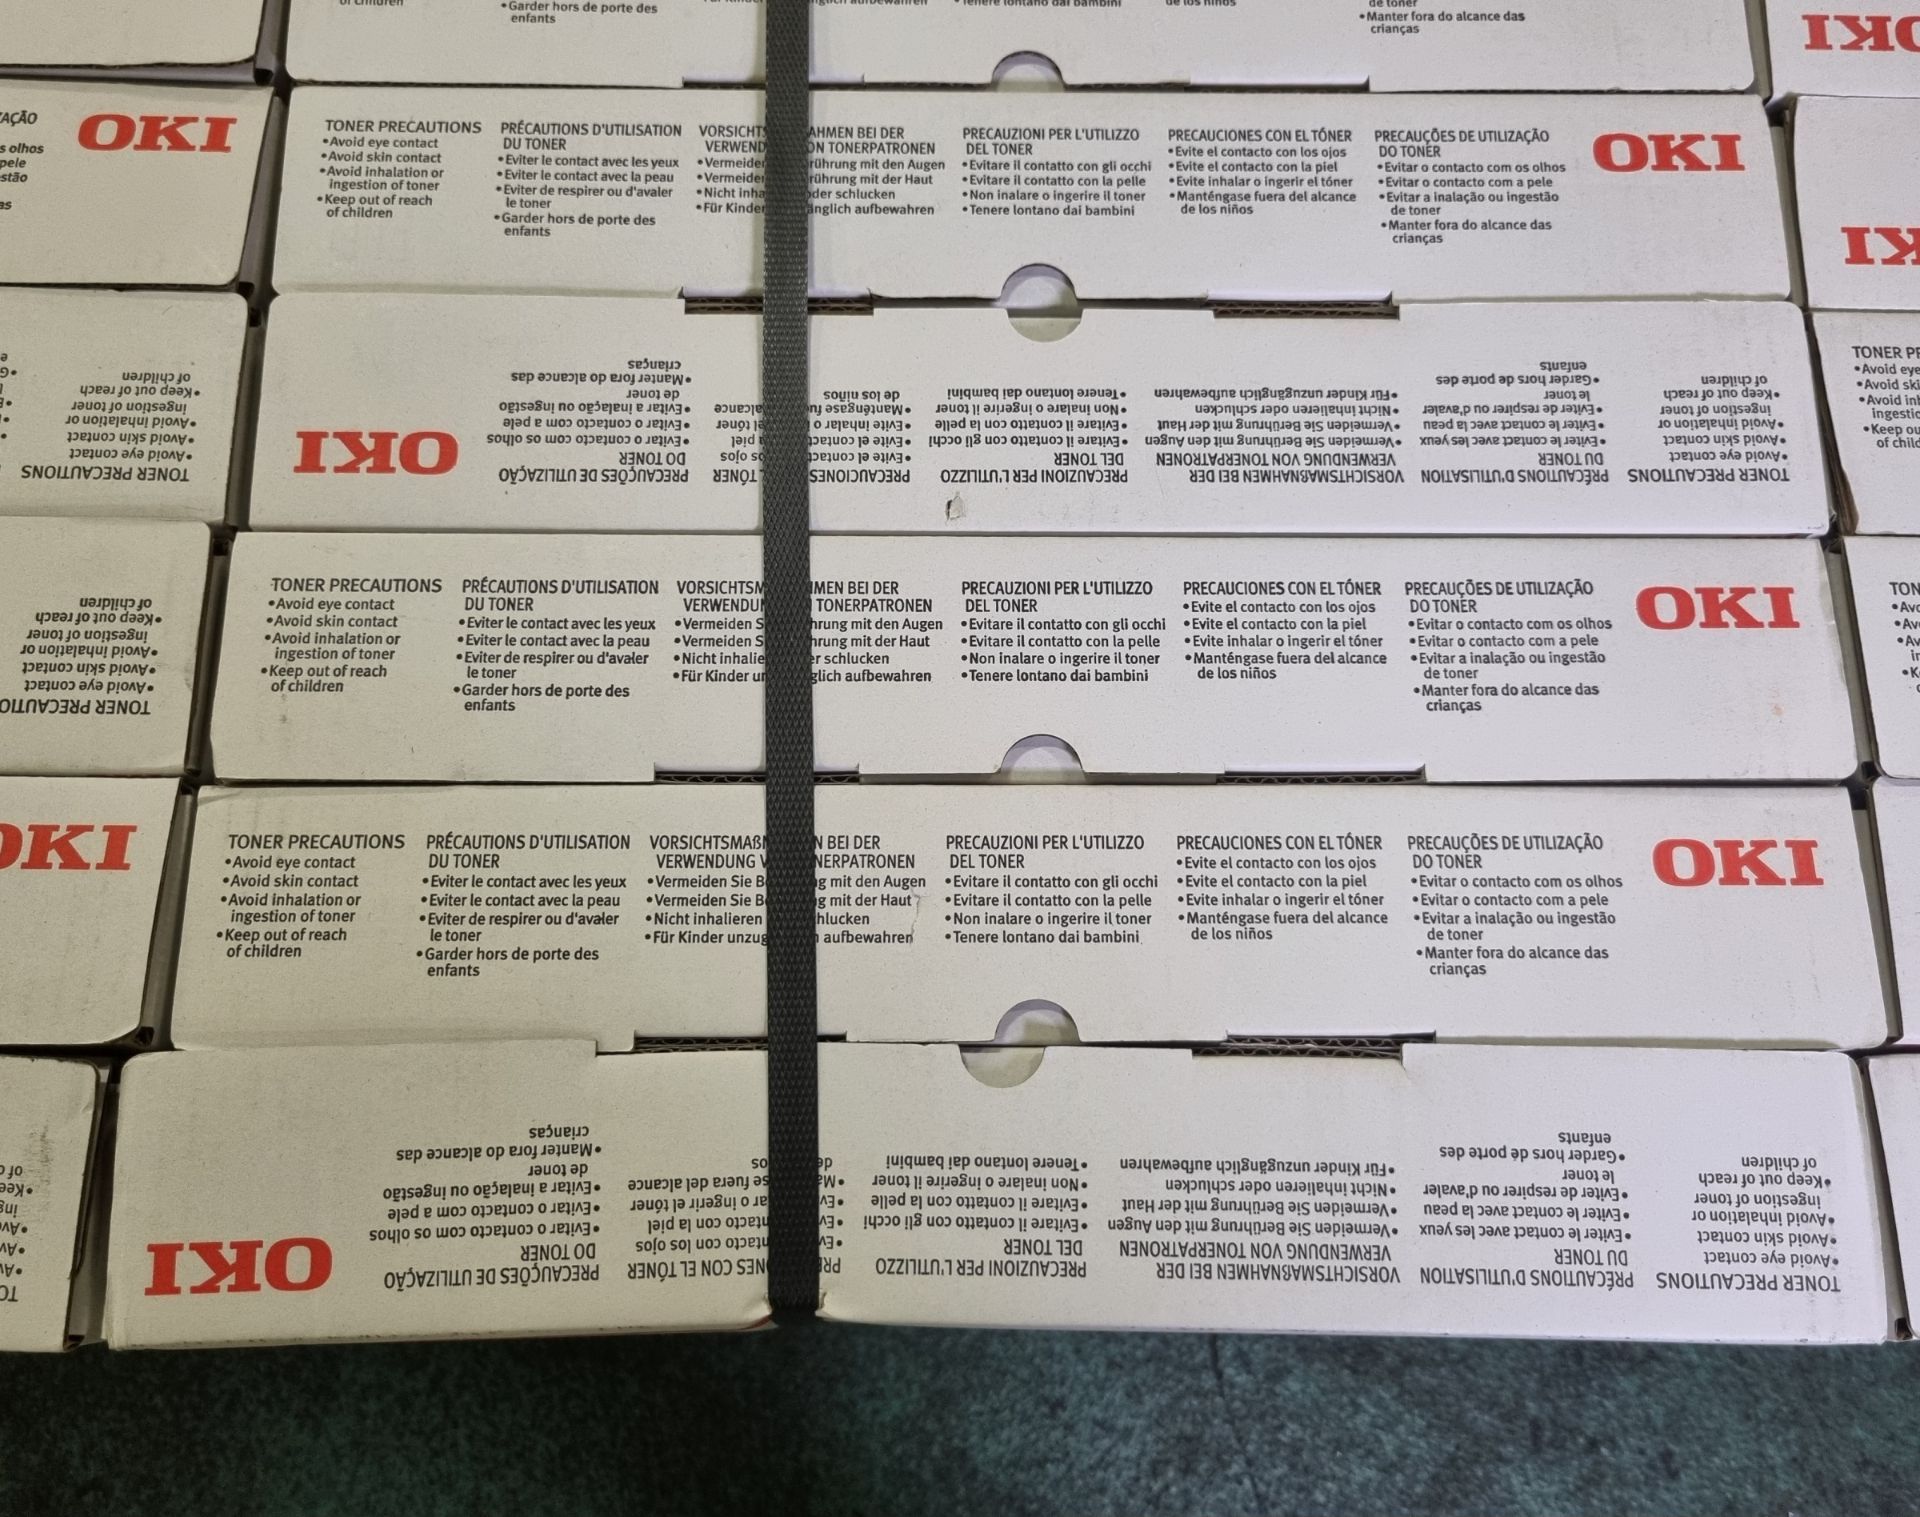 180x Oki toner cartridges - C822, C823, C833 and C843 - black, yellow, magenta and cyan - Image 4 of 4